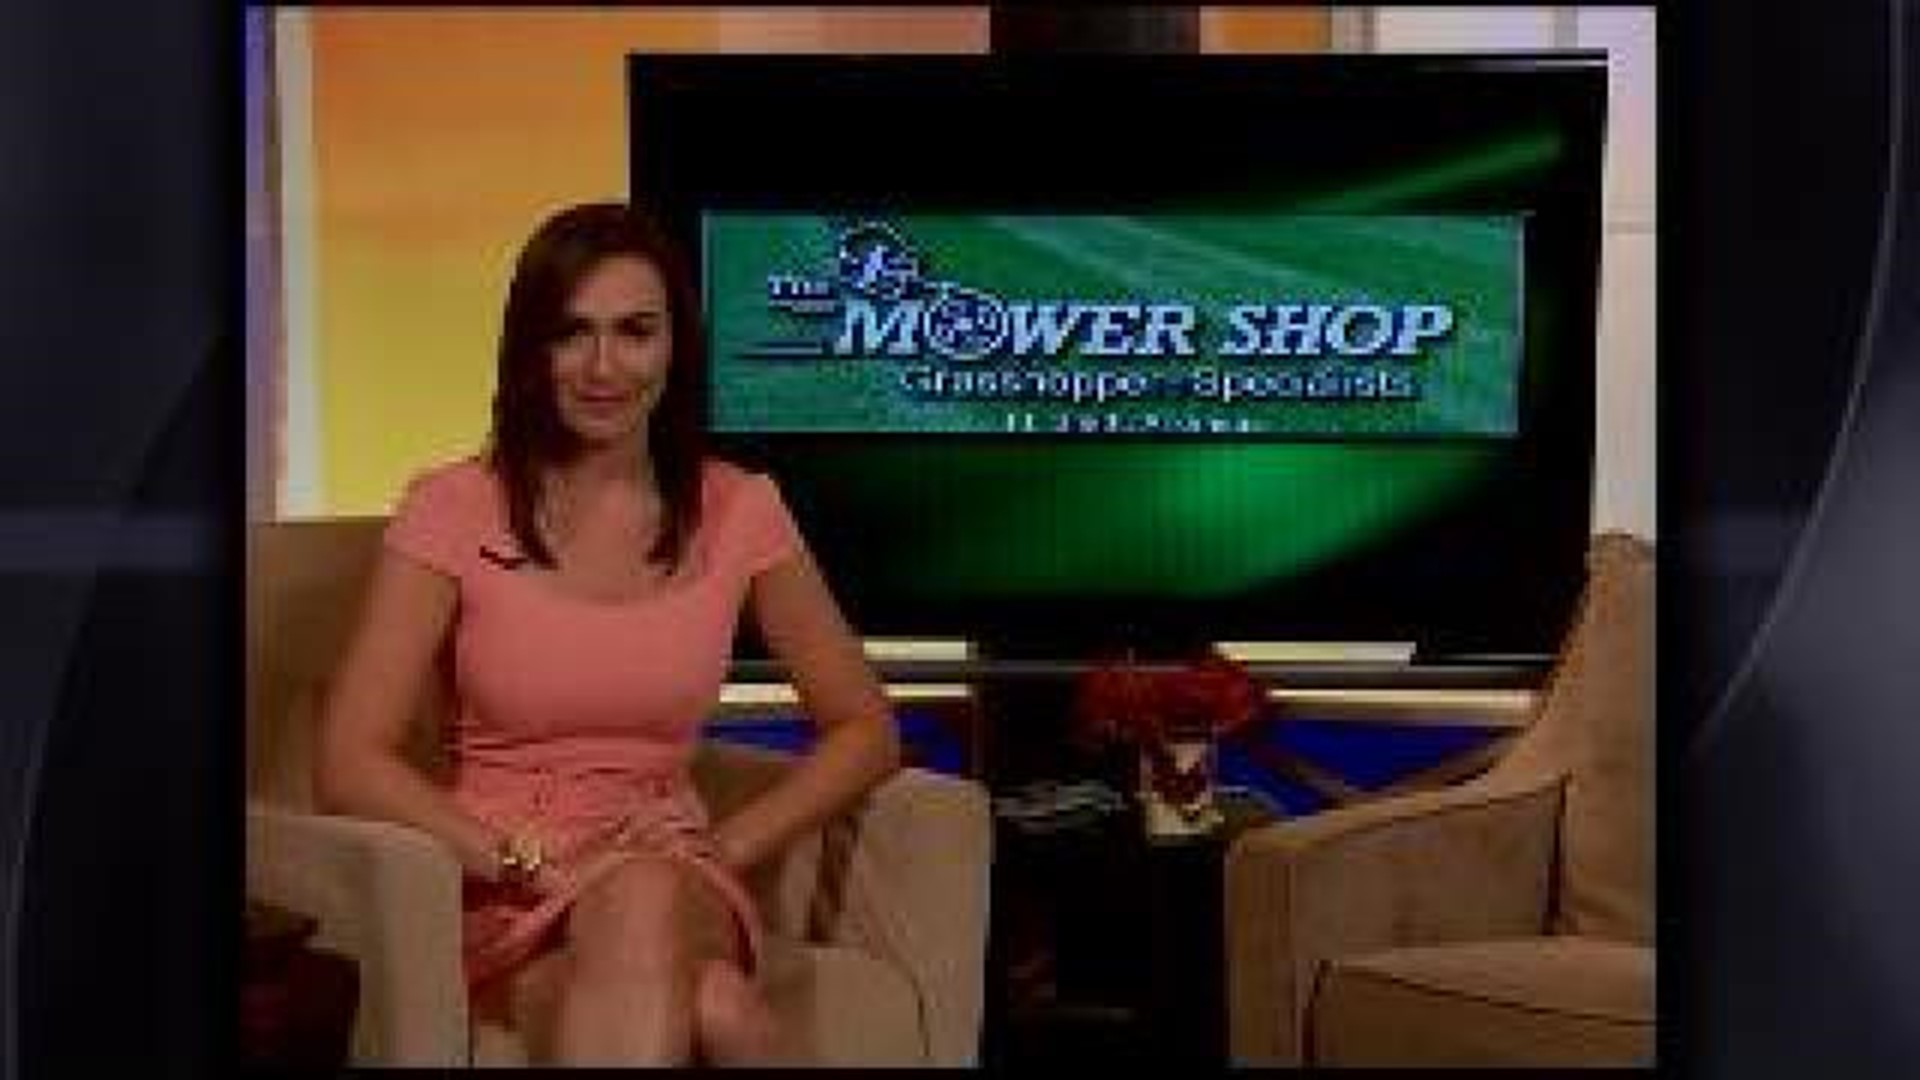 The Mower Shop